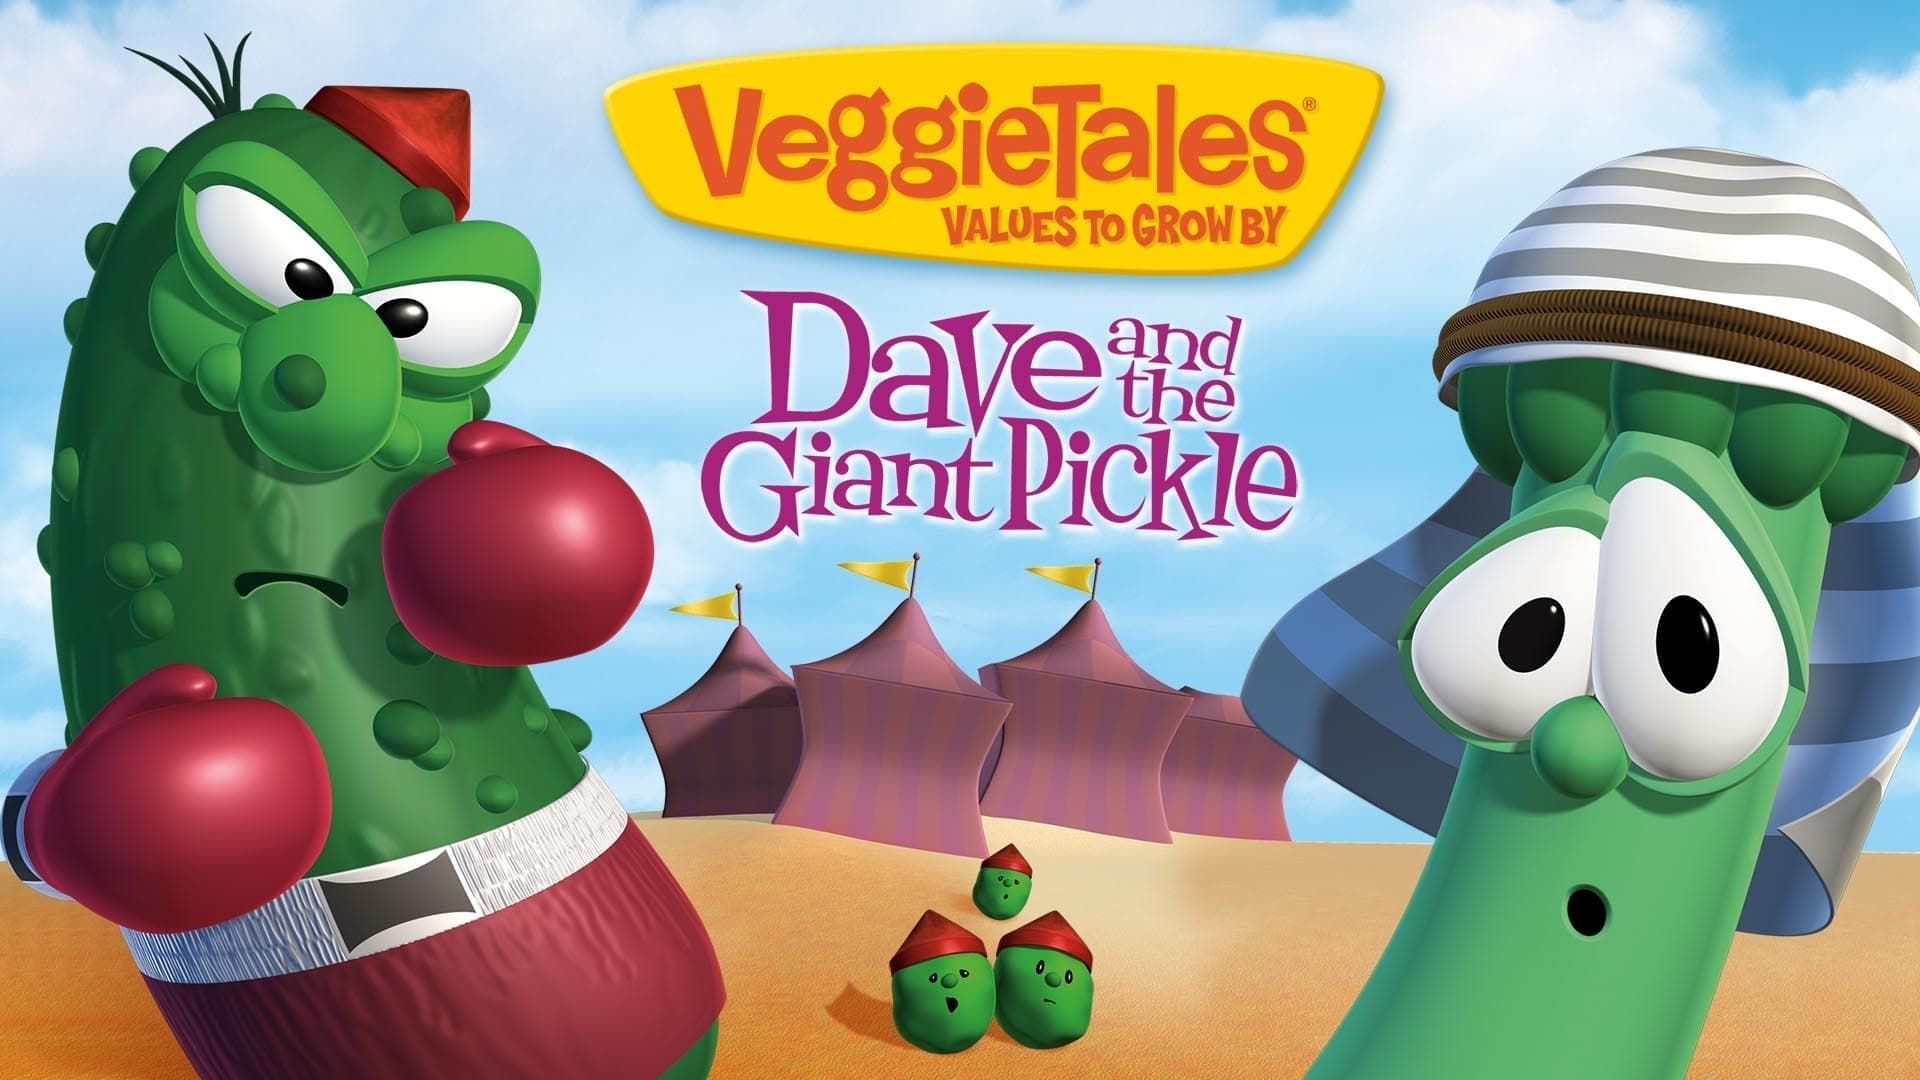 VeggieTales background